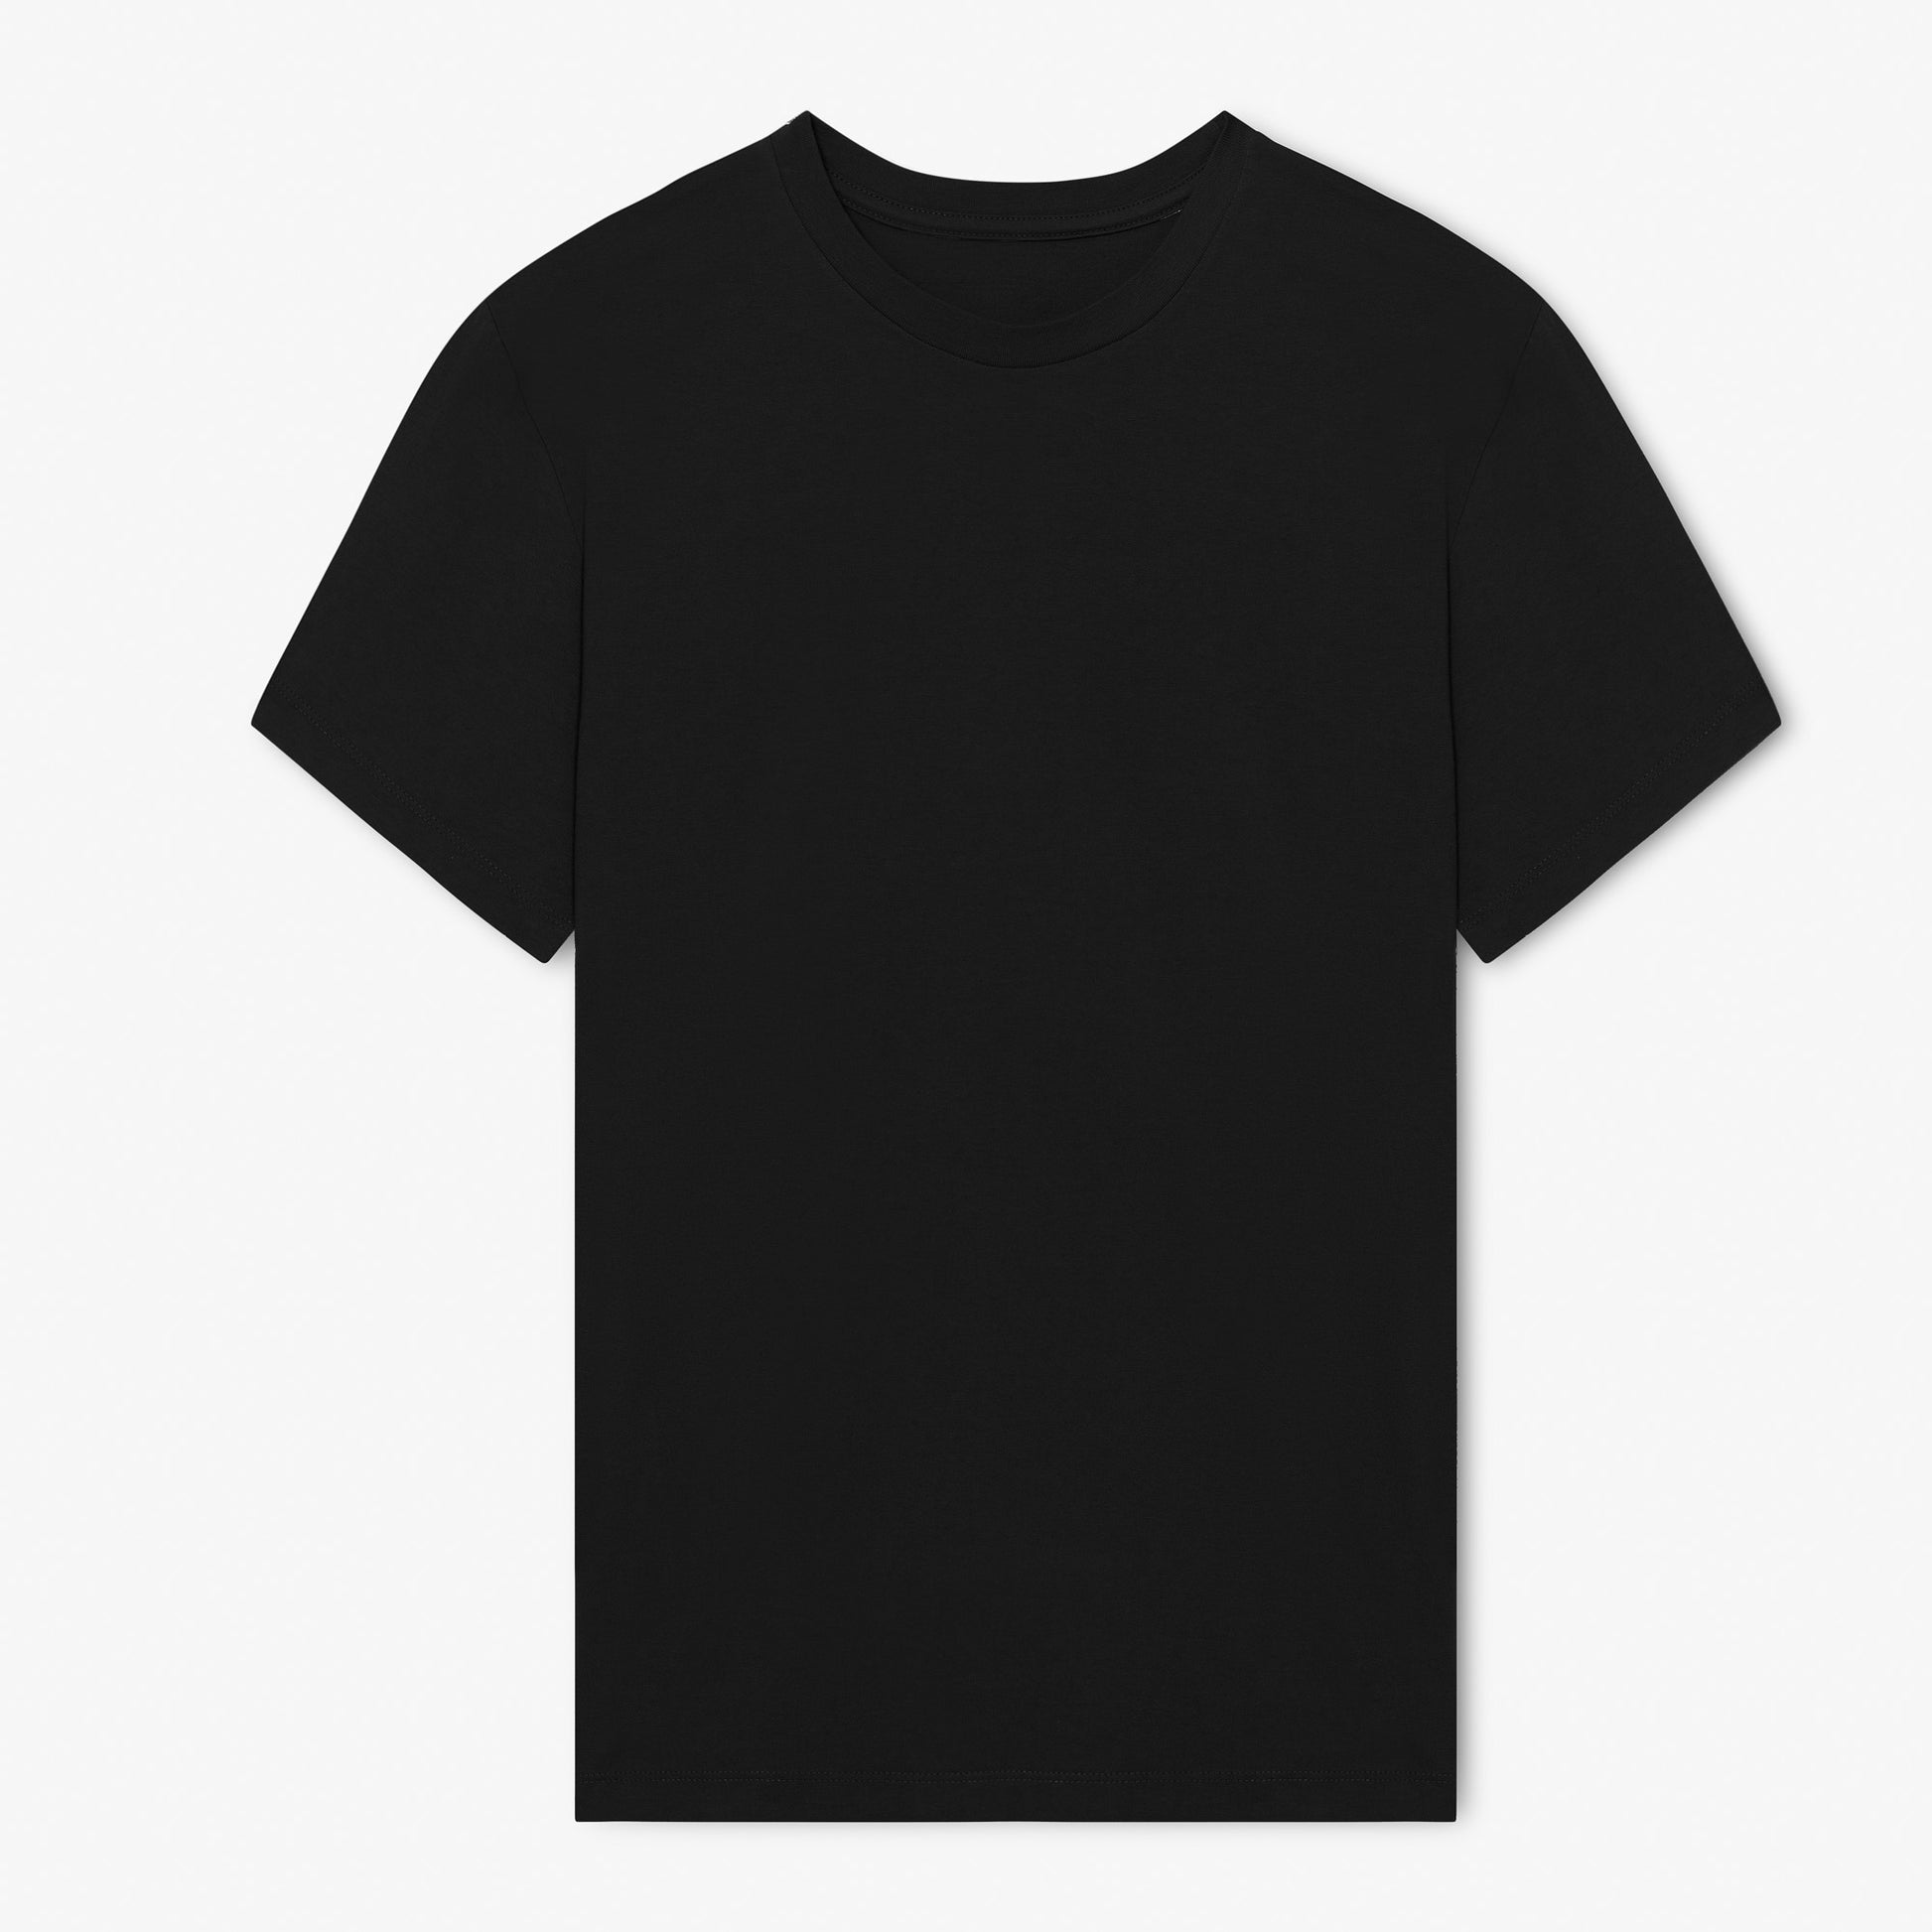 Adesso Man Cotton T-Shirt - Black